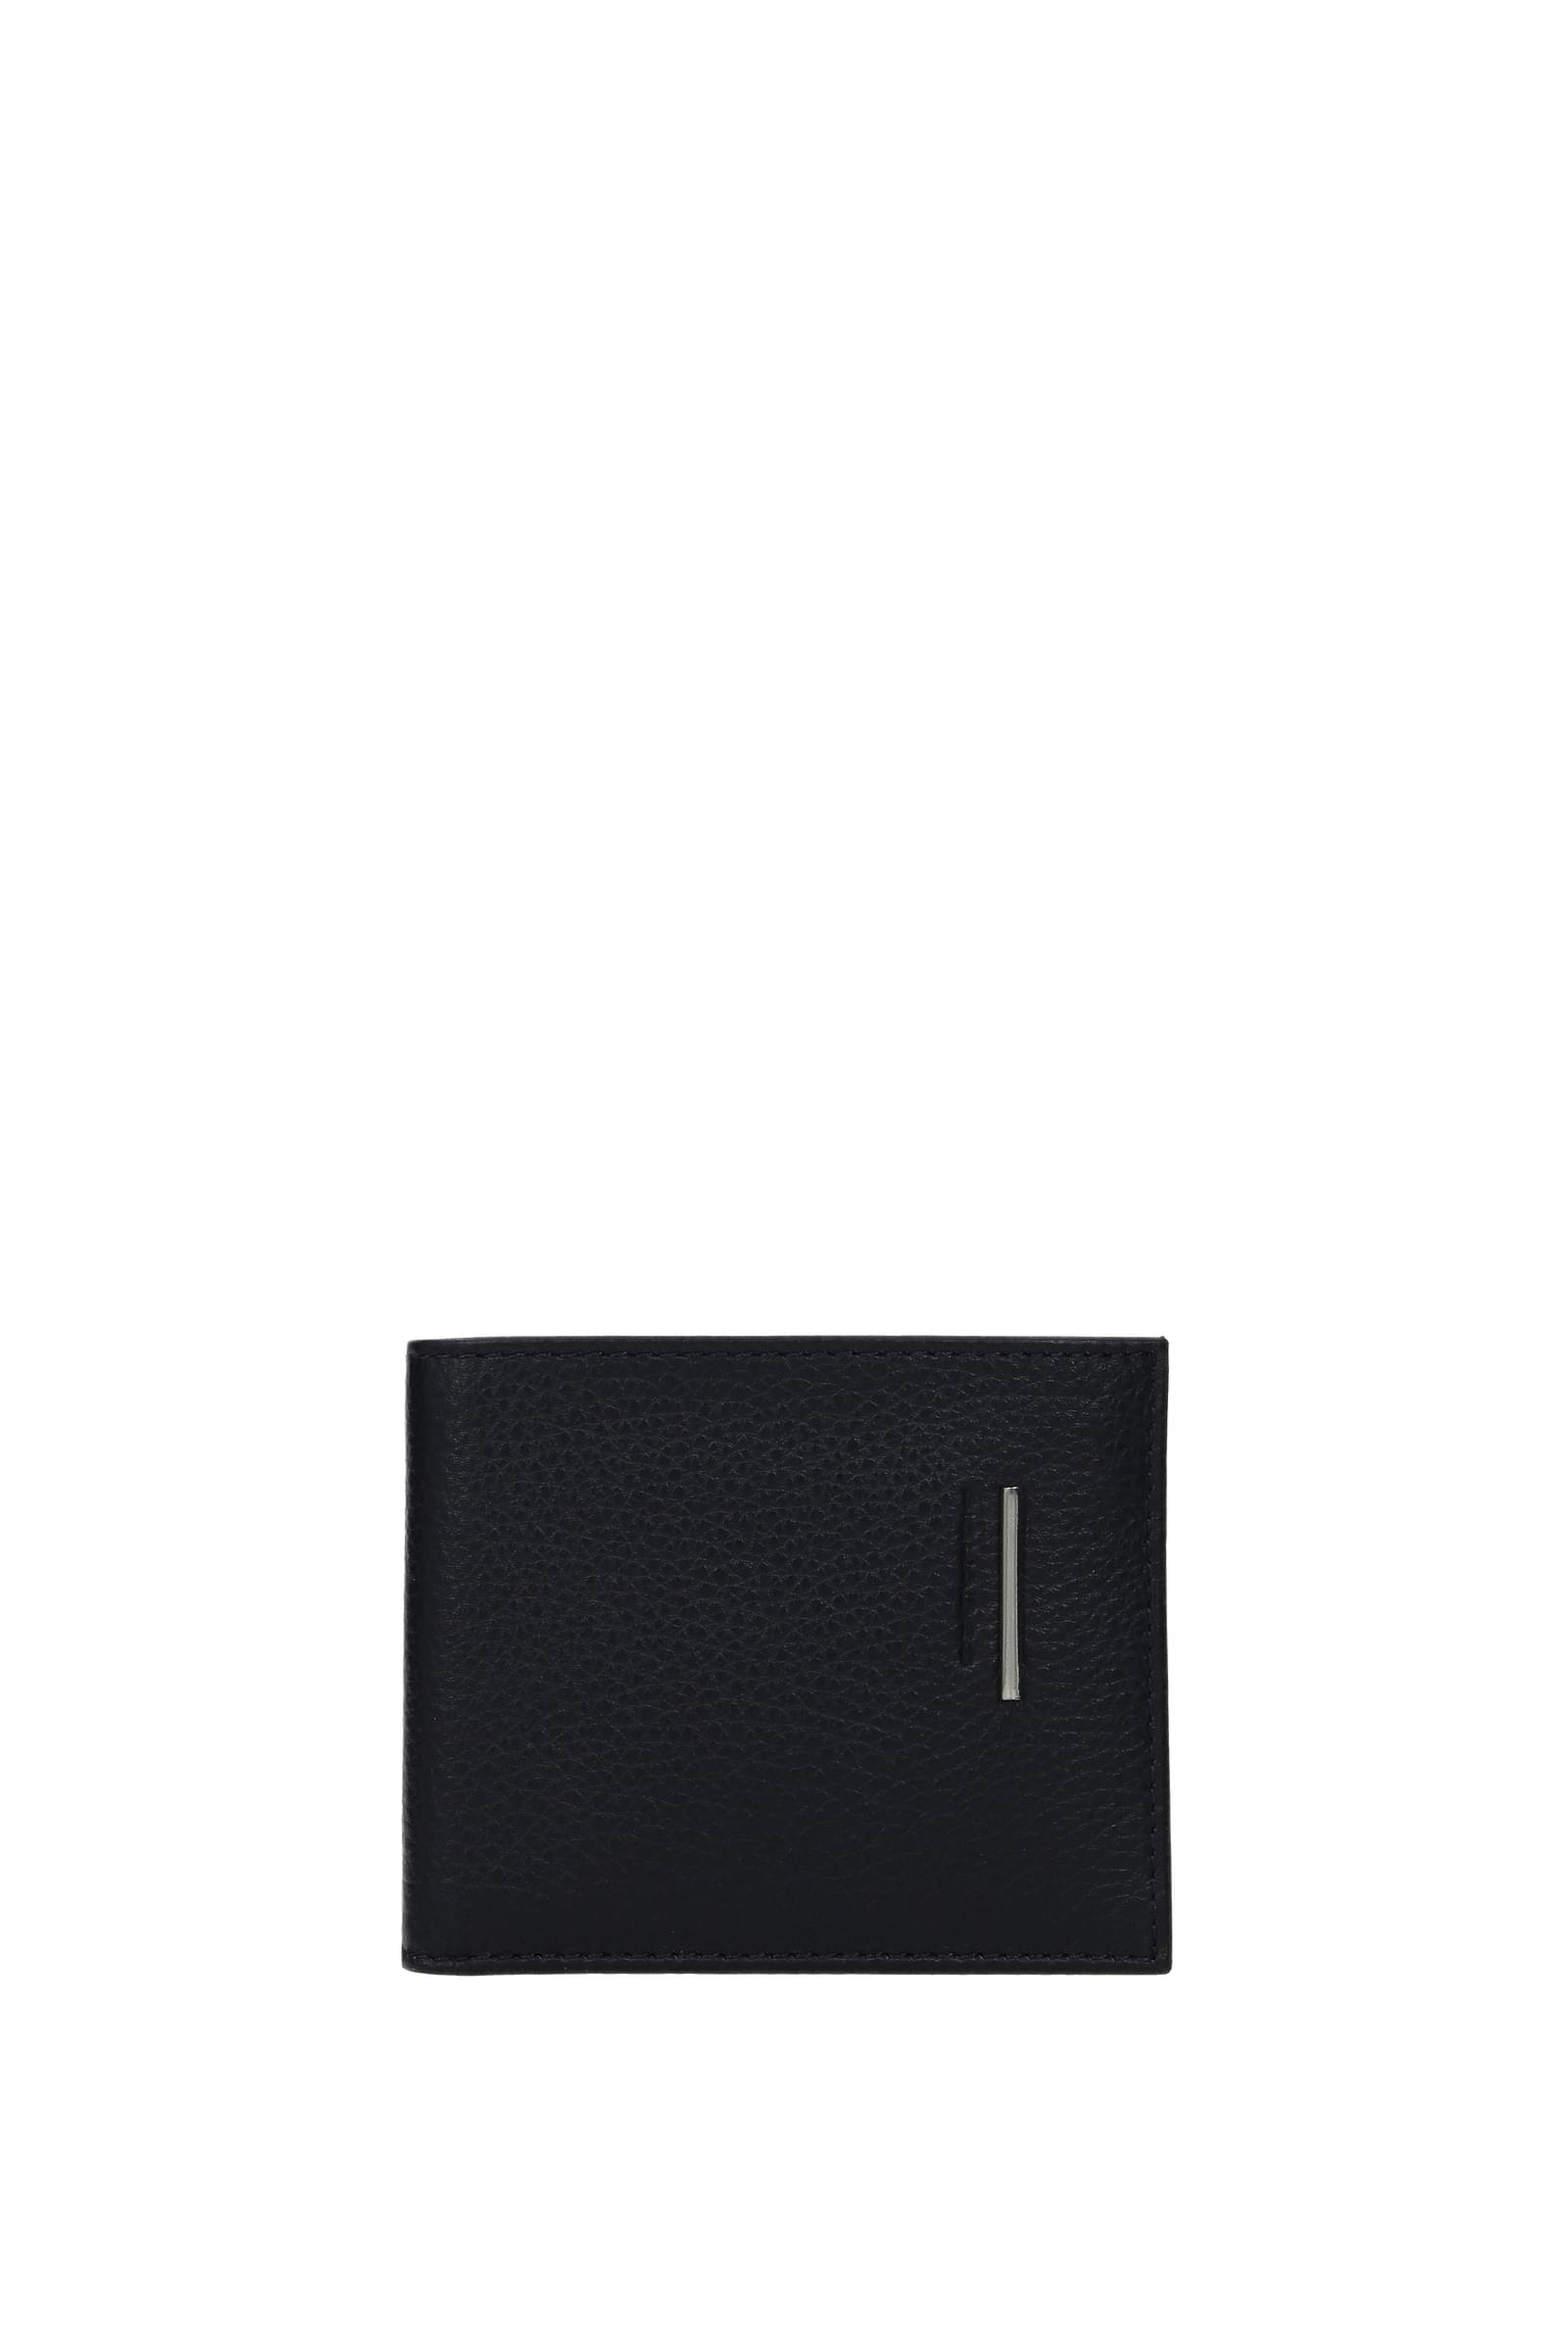 財布（PIQUADRO） - 折り財布